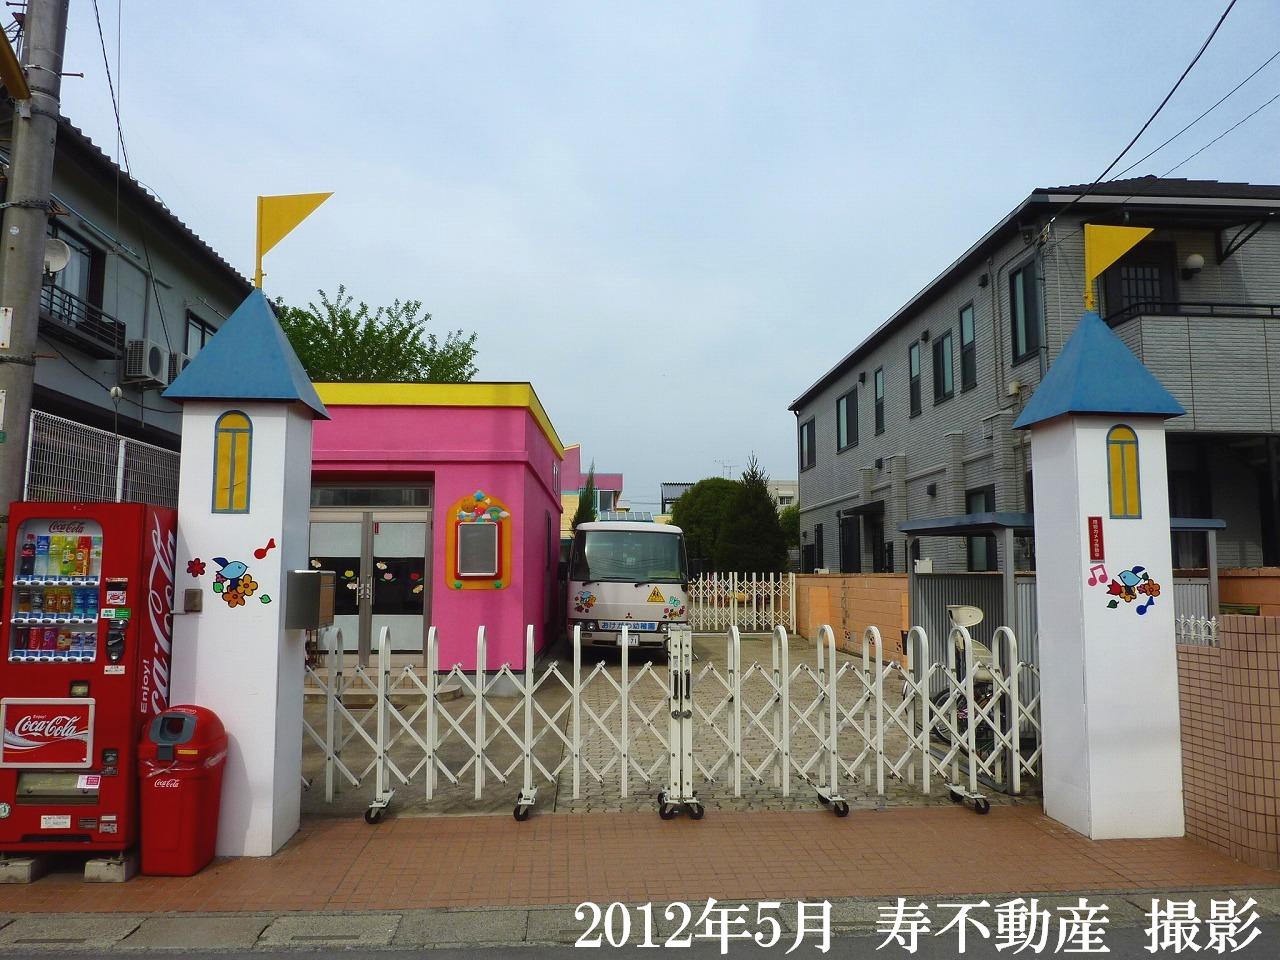 kindergarten ・ Nursery. Okegawa kindergarten (kindergarten ・ 521m to the nursery)